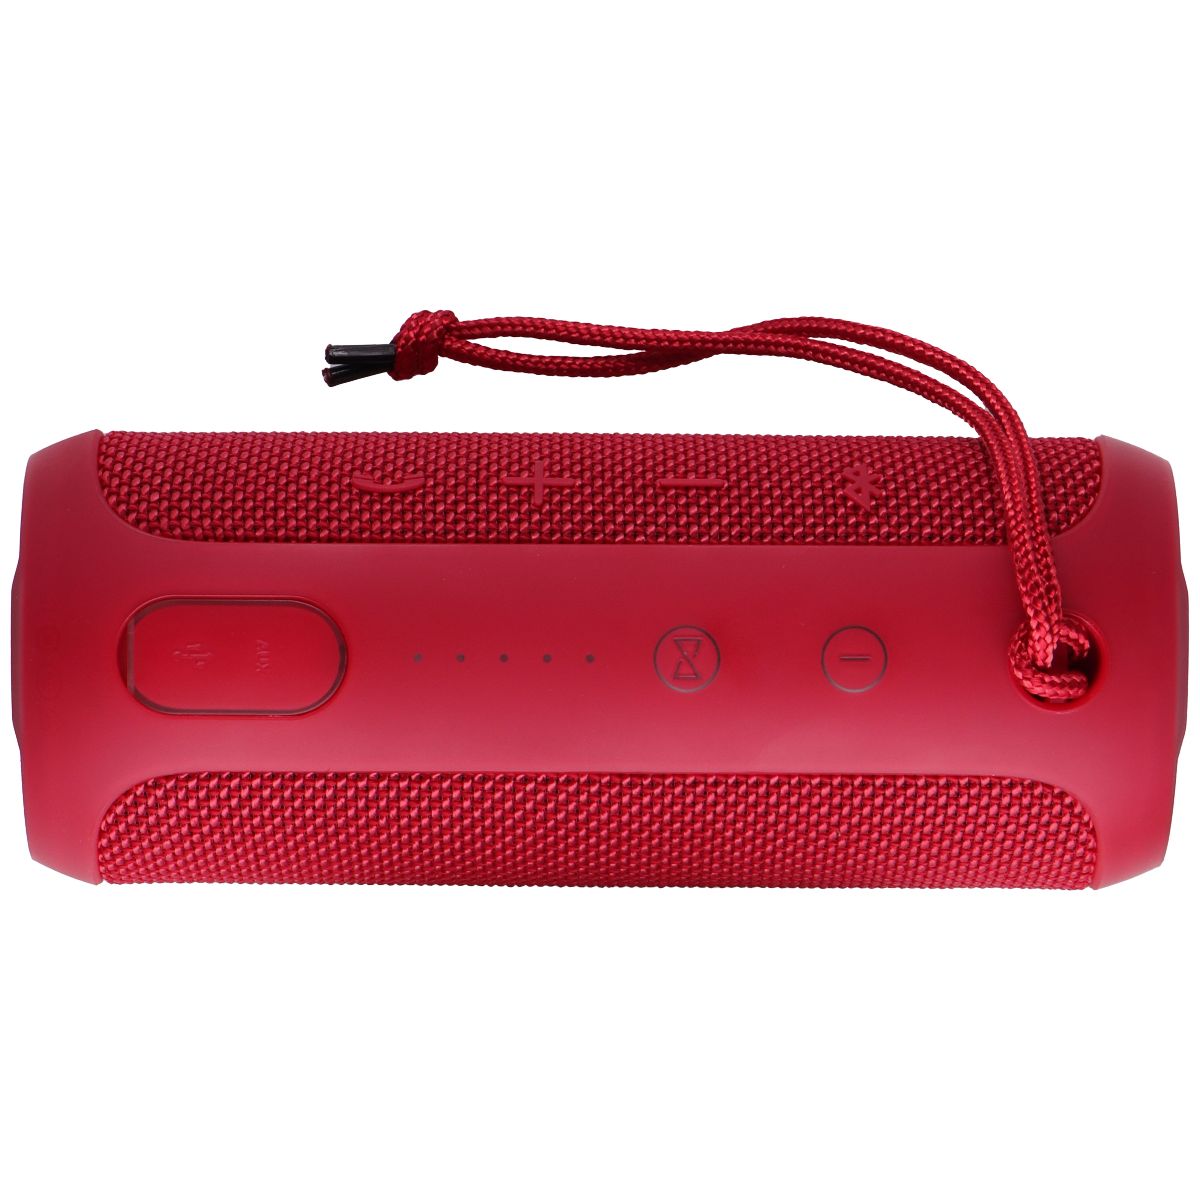 JBL Flip 3 Splashproof Portable Wireless Bluetooth Speaker - Red Cell Phone - Audio Docks & Speakers JBL    - Simple Cell Bulk Wholesale Pricing - USA Seller